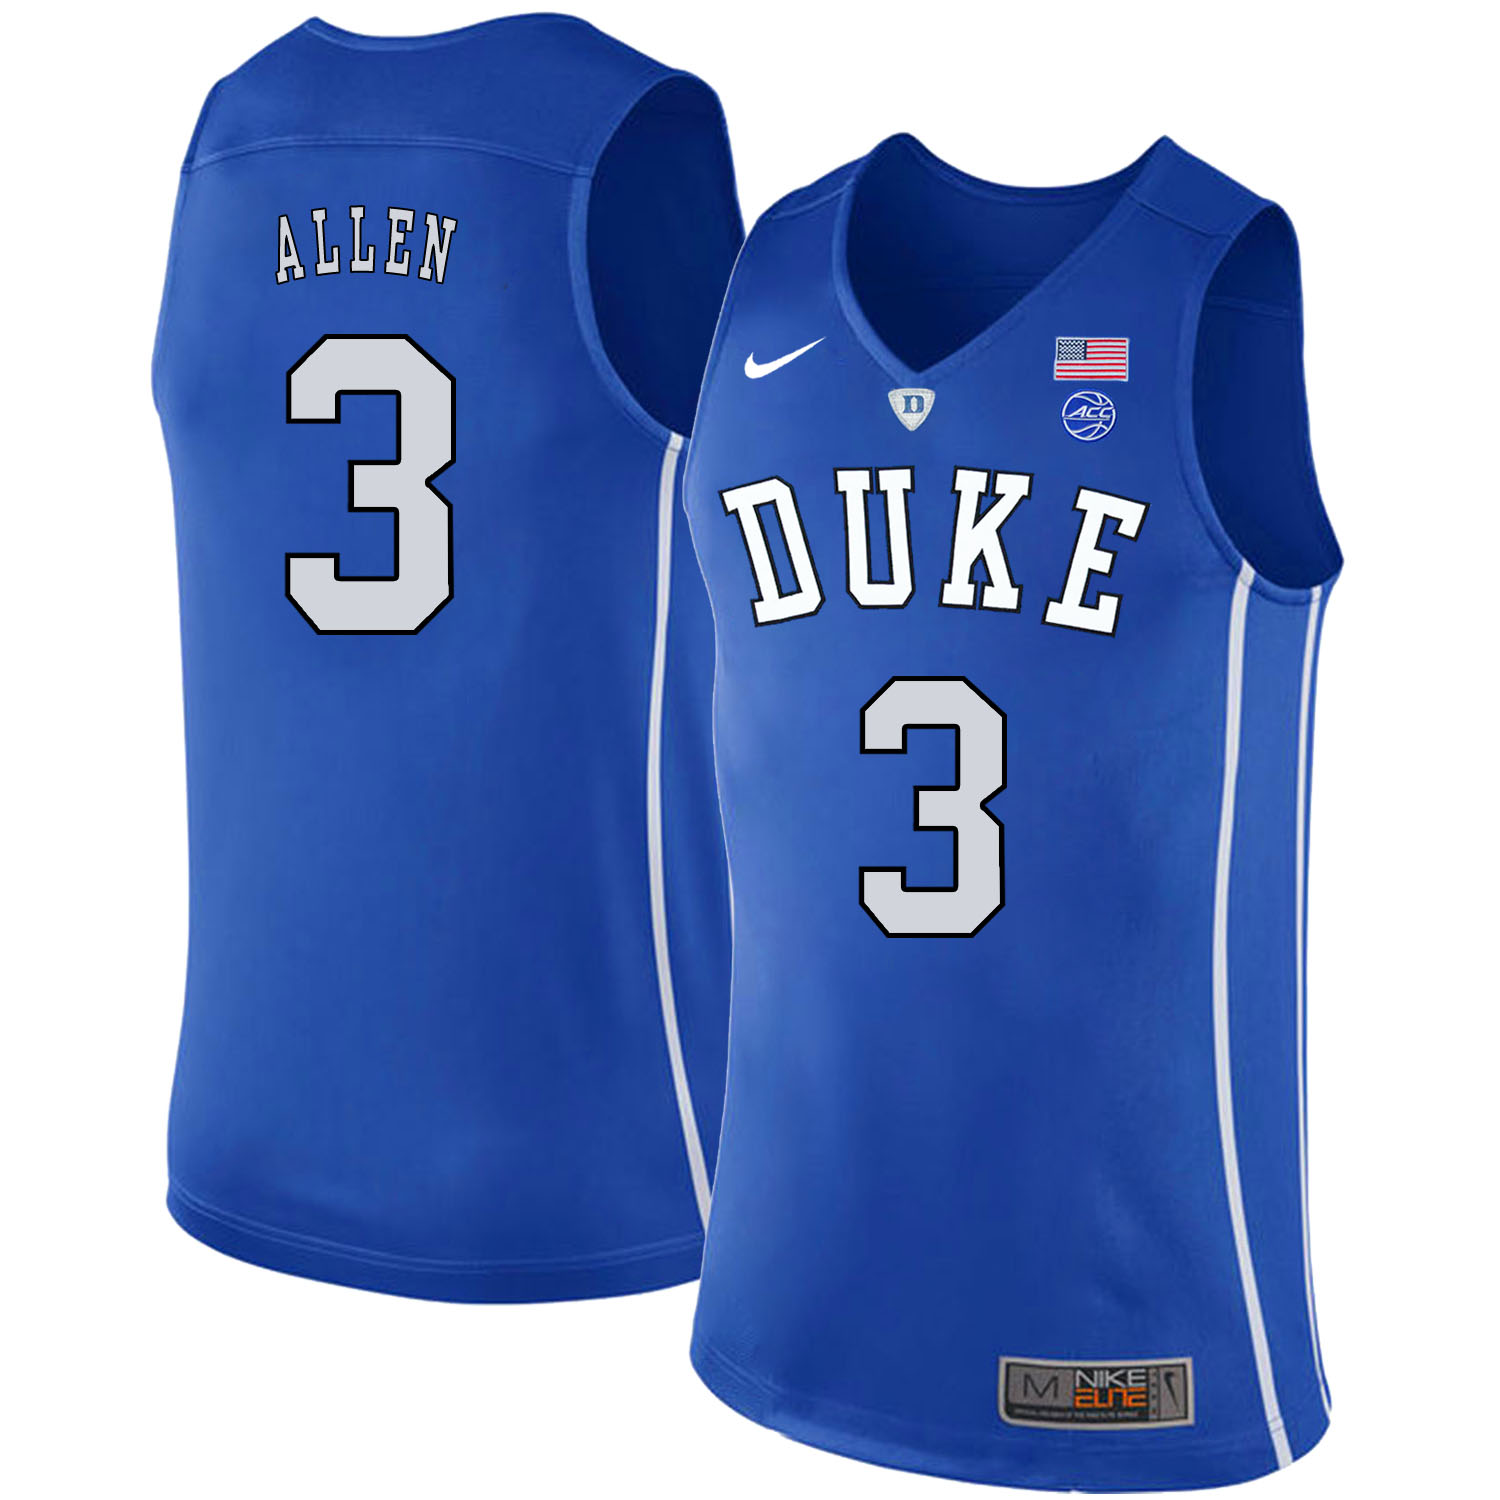 Duke Blue Devils 3 Garyson Allen Blue Nike College Basketball Jersey